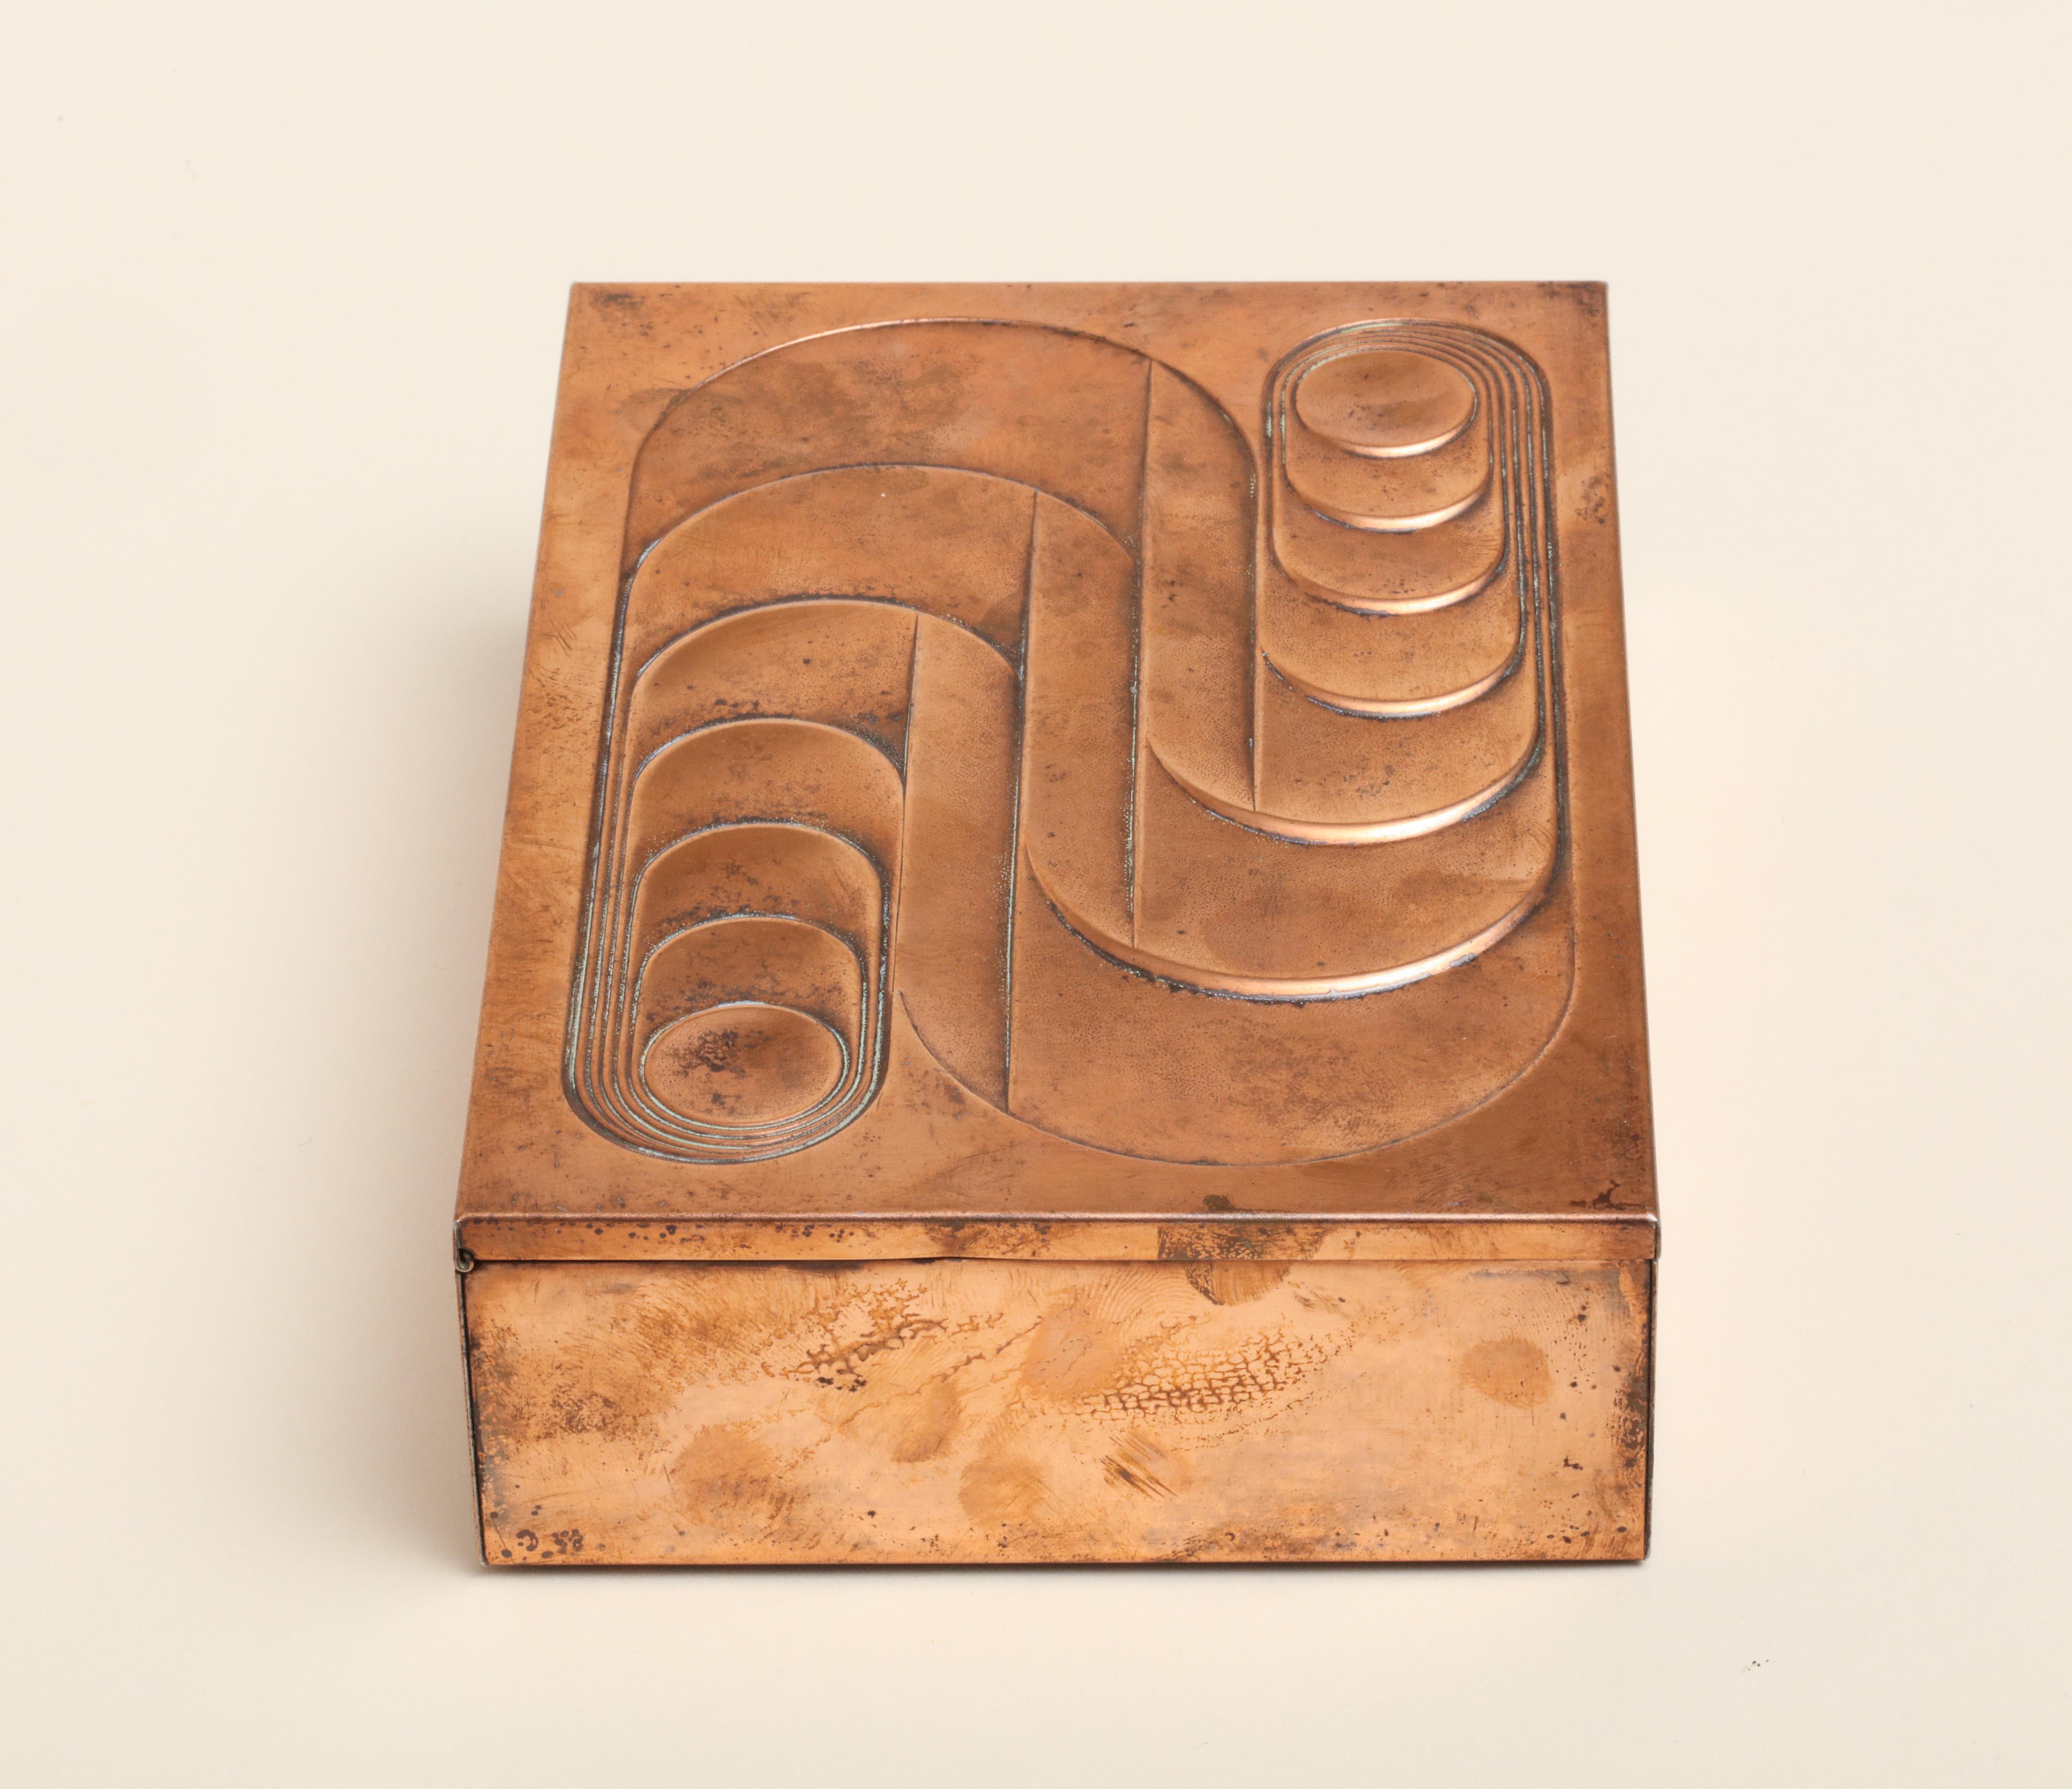 American Art Deco Hinged Copper Box with Geometric Design (Art déco)